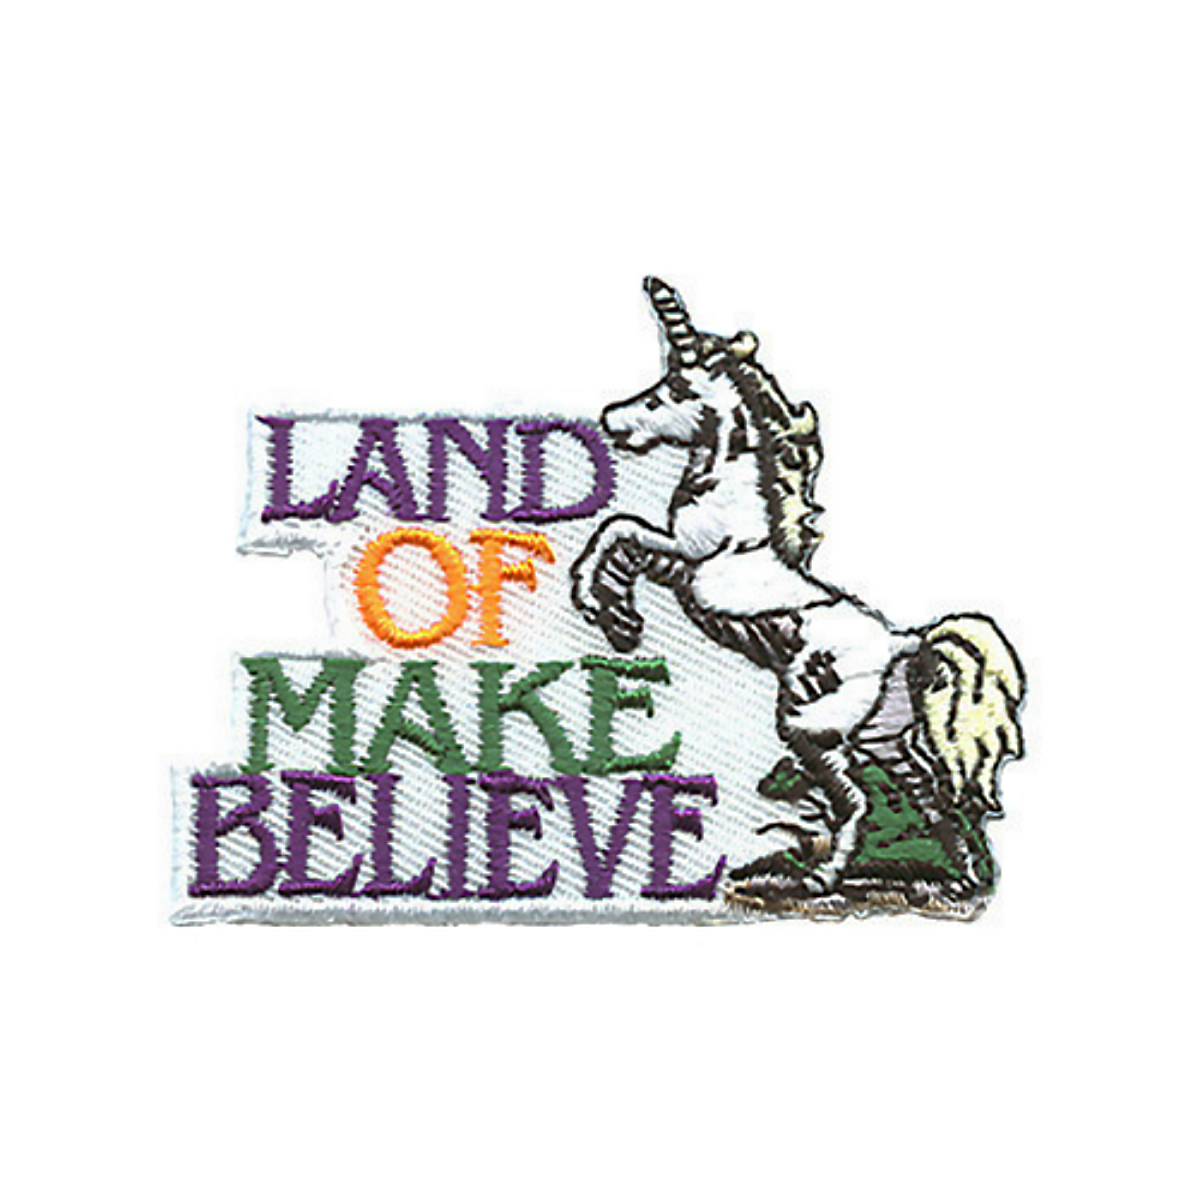 Land of Make Believe - W